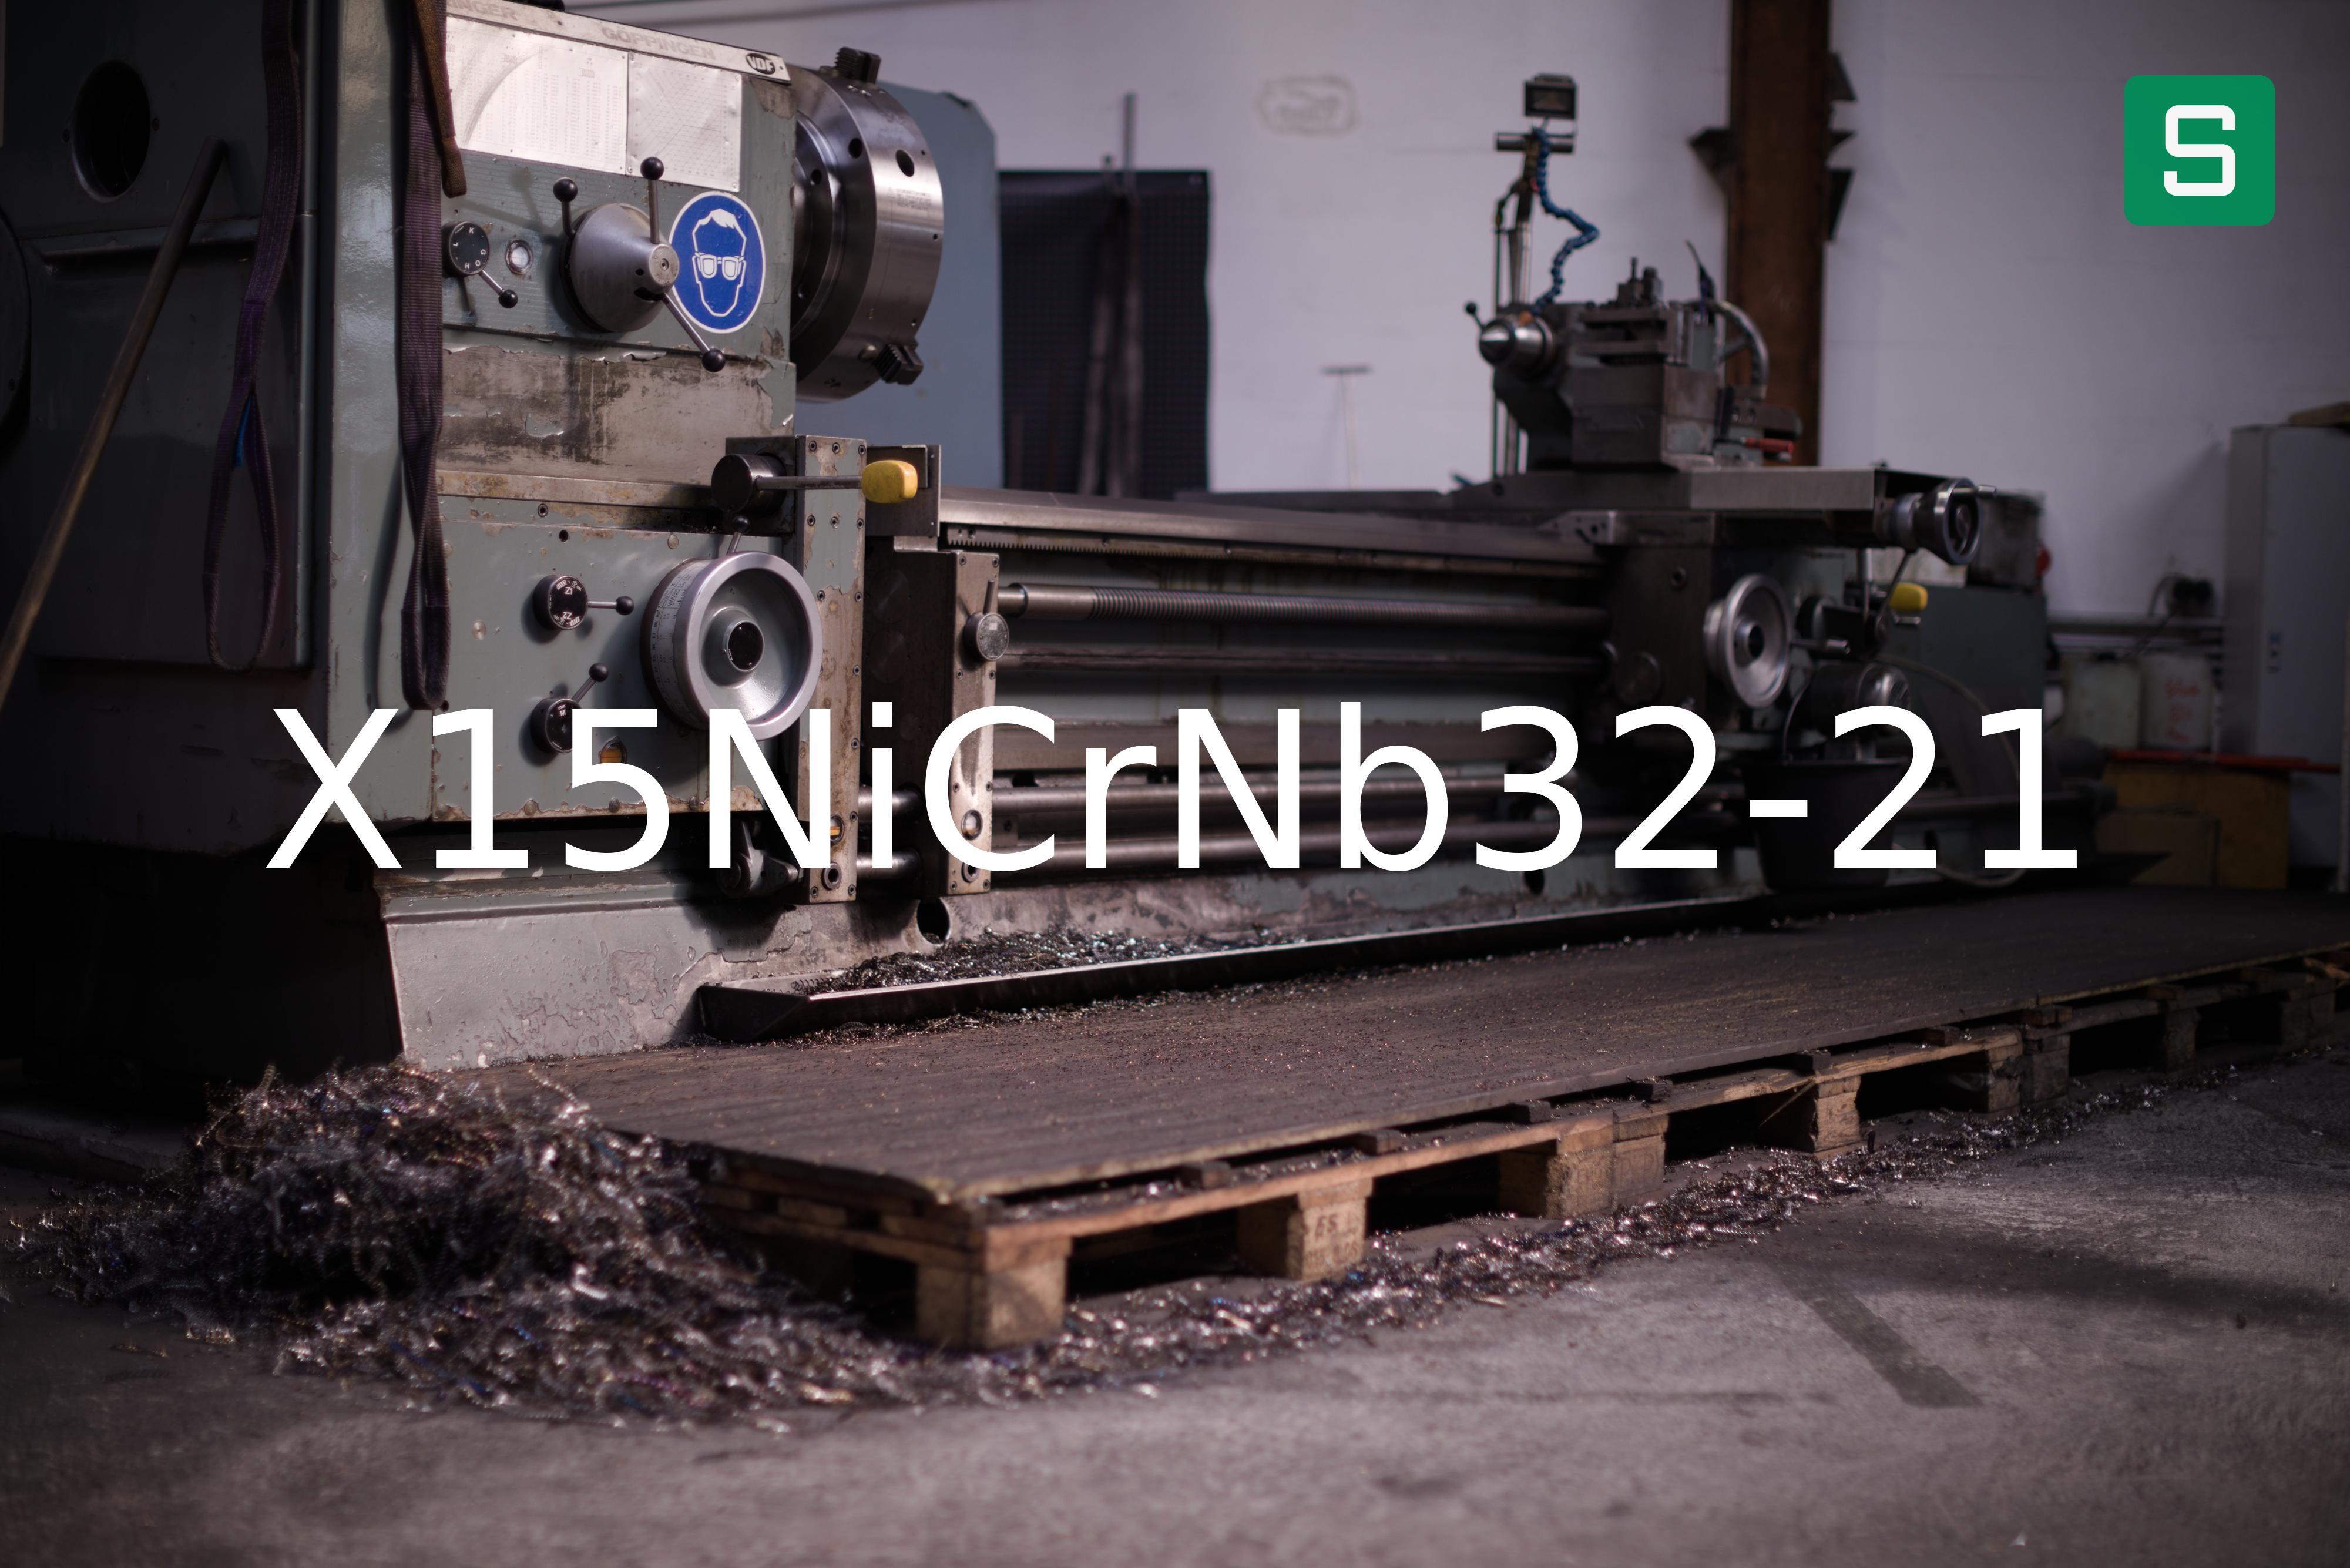 Steel Material: X15NiCrNb32-21